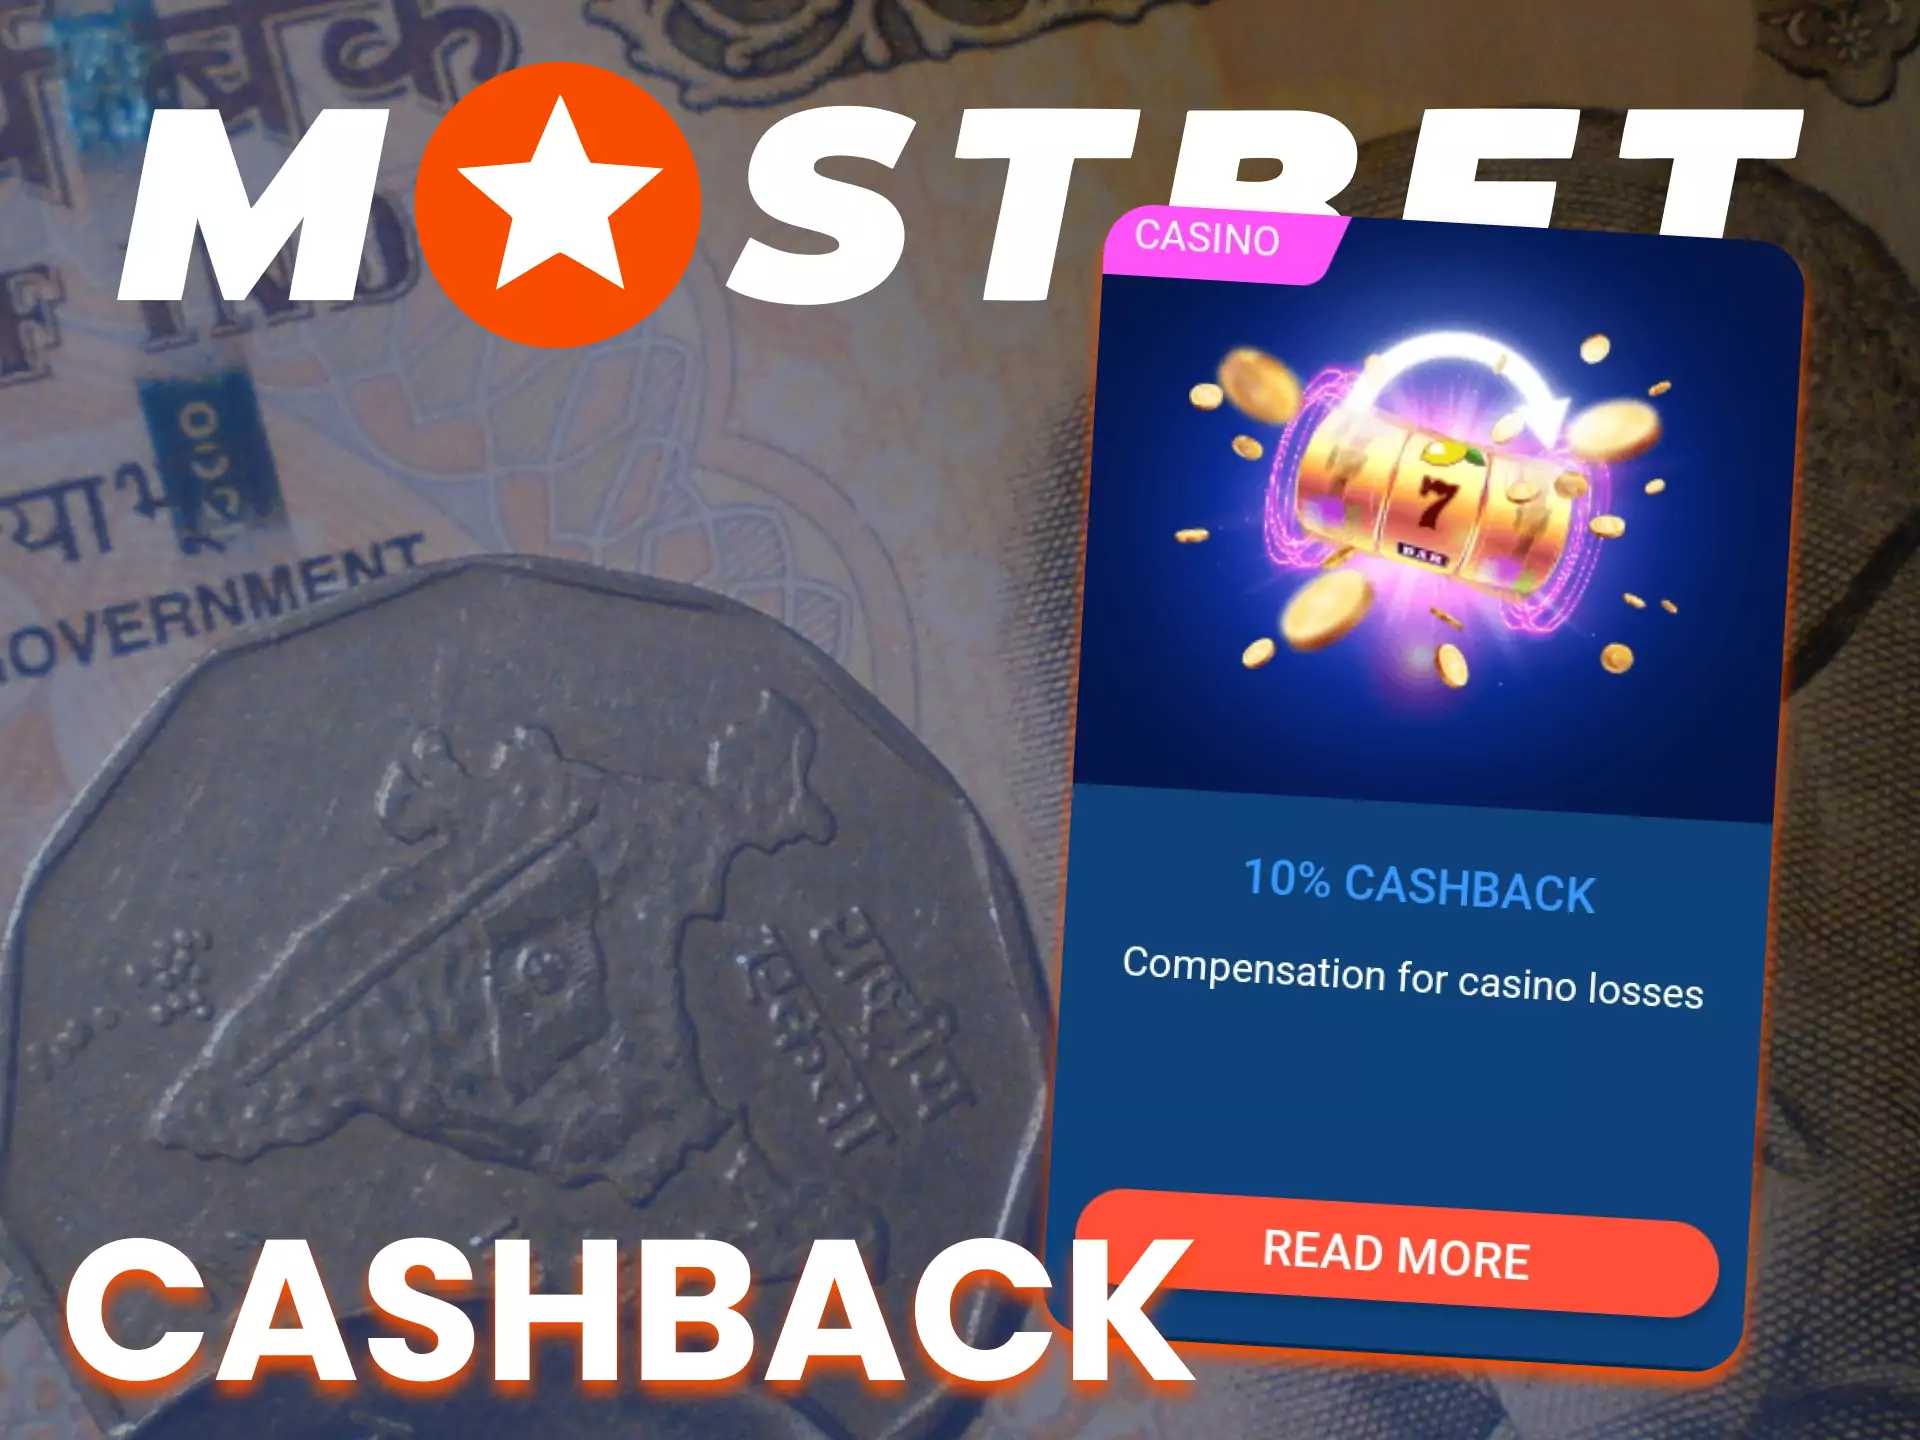 On the Mostbet app, get a special bonus for cashback.